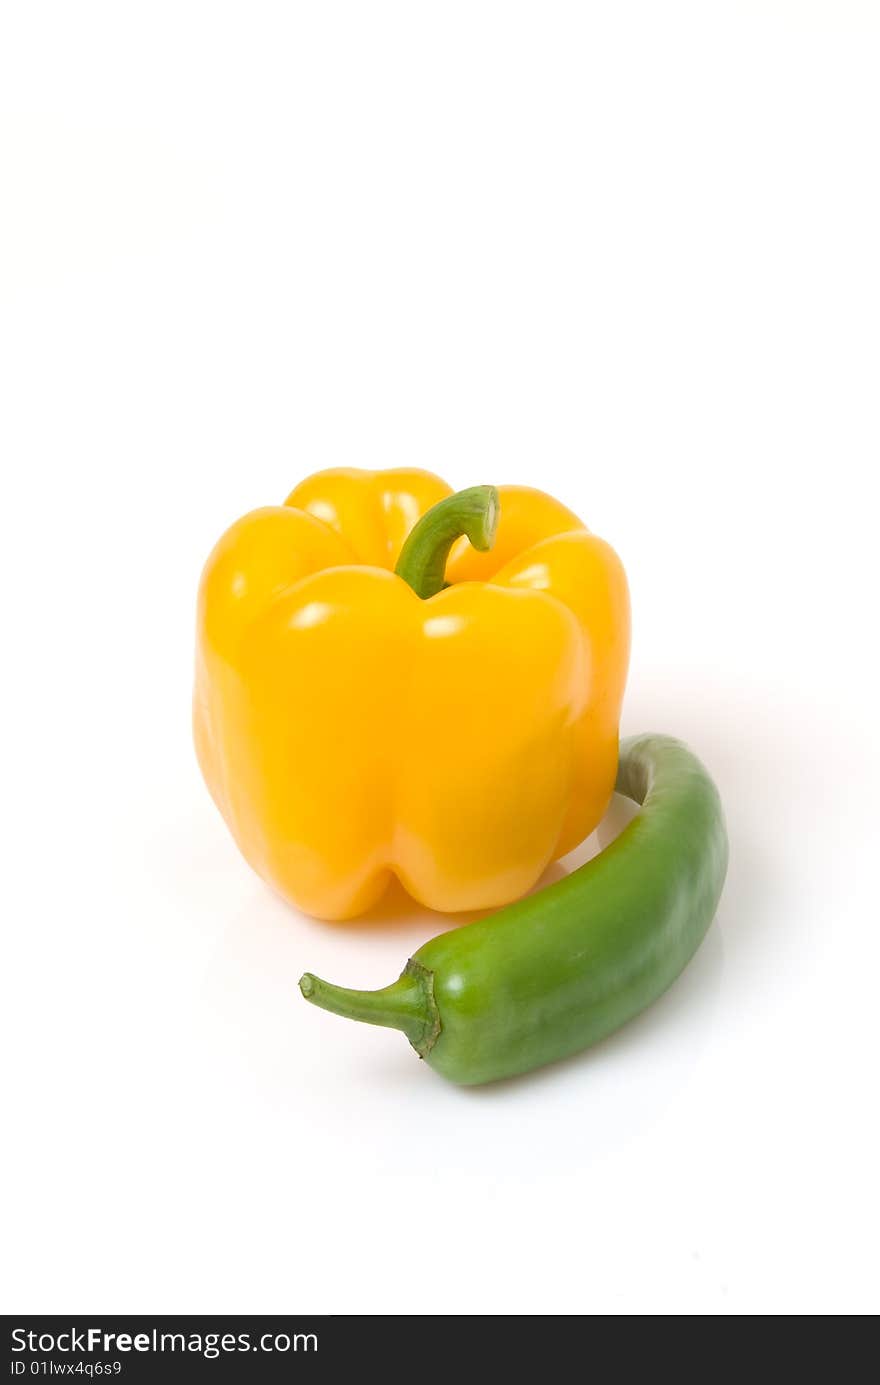 Yellow bell pepper with green Anaheim pepper. Yellow bell pepper with green Anaheim pepper